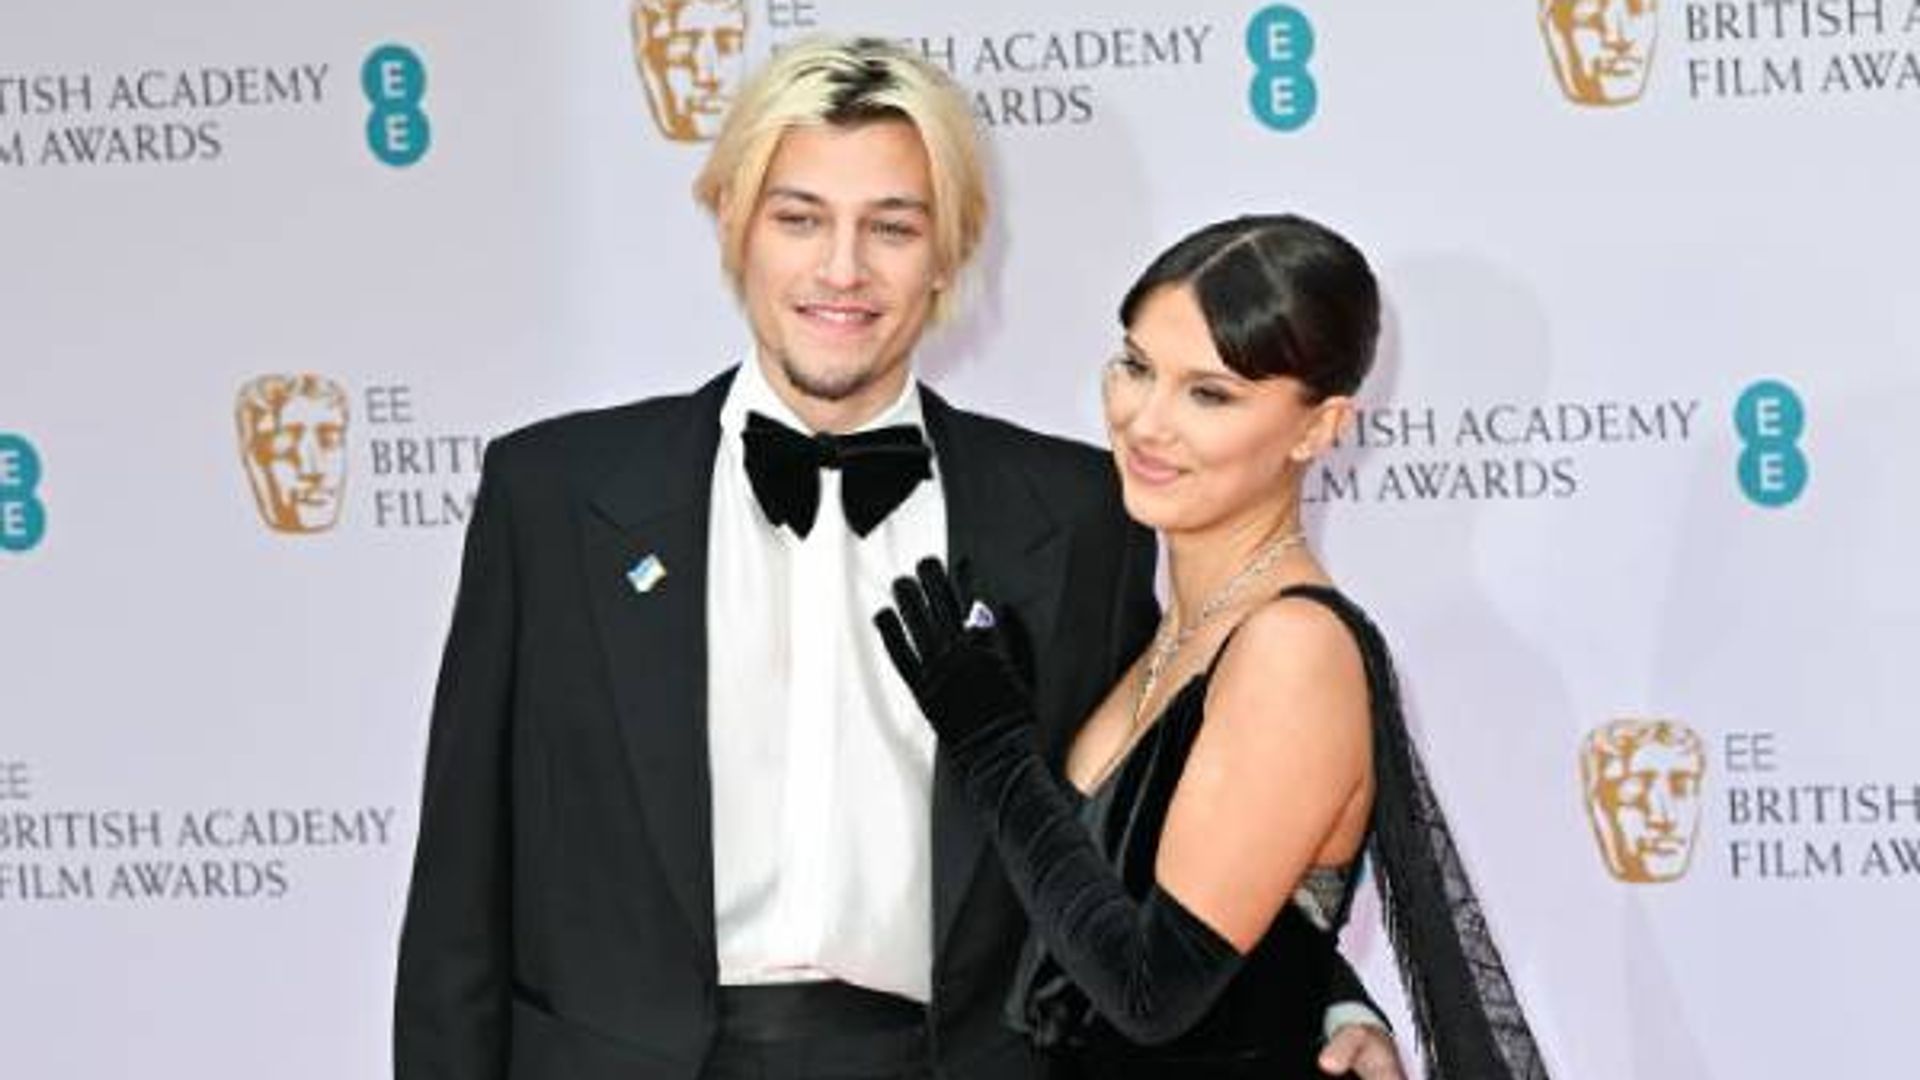 Millie Bobby Brown  and Jake Bongiovi pose at the British Film Awards